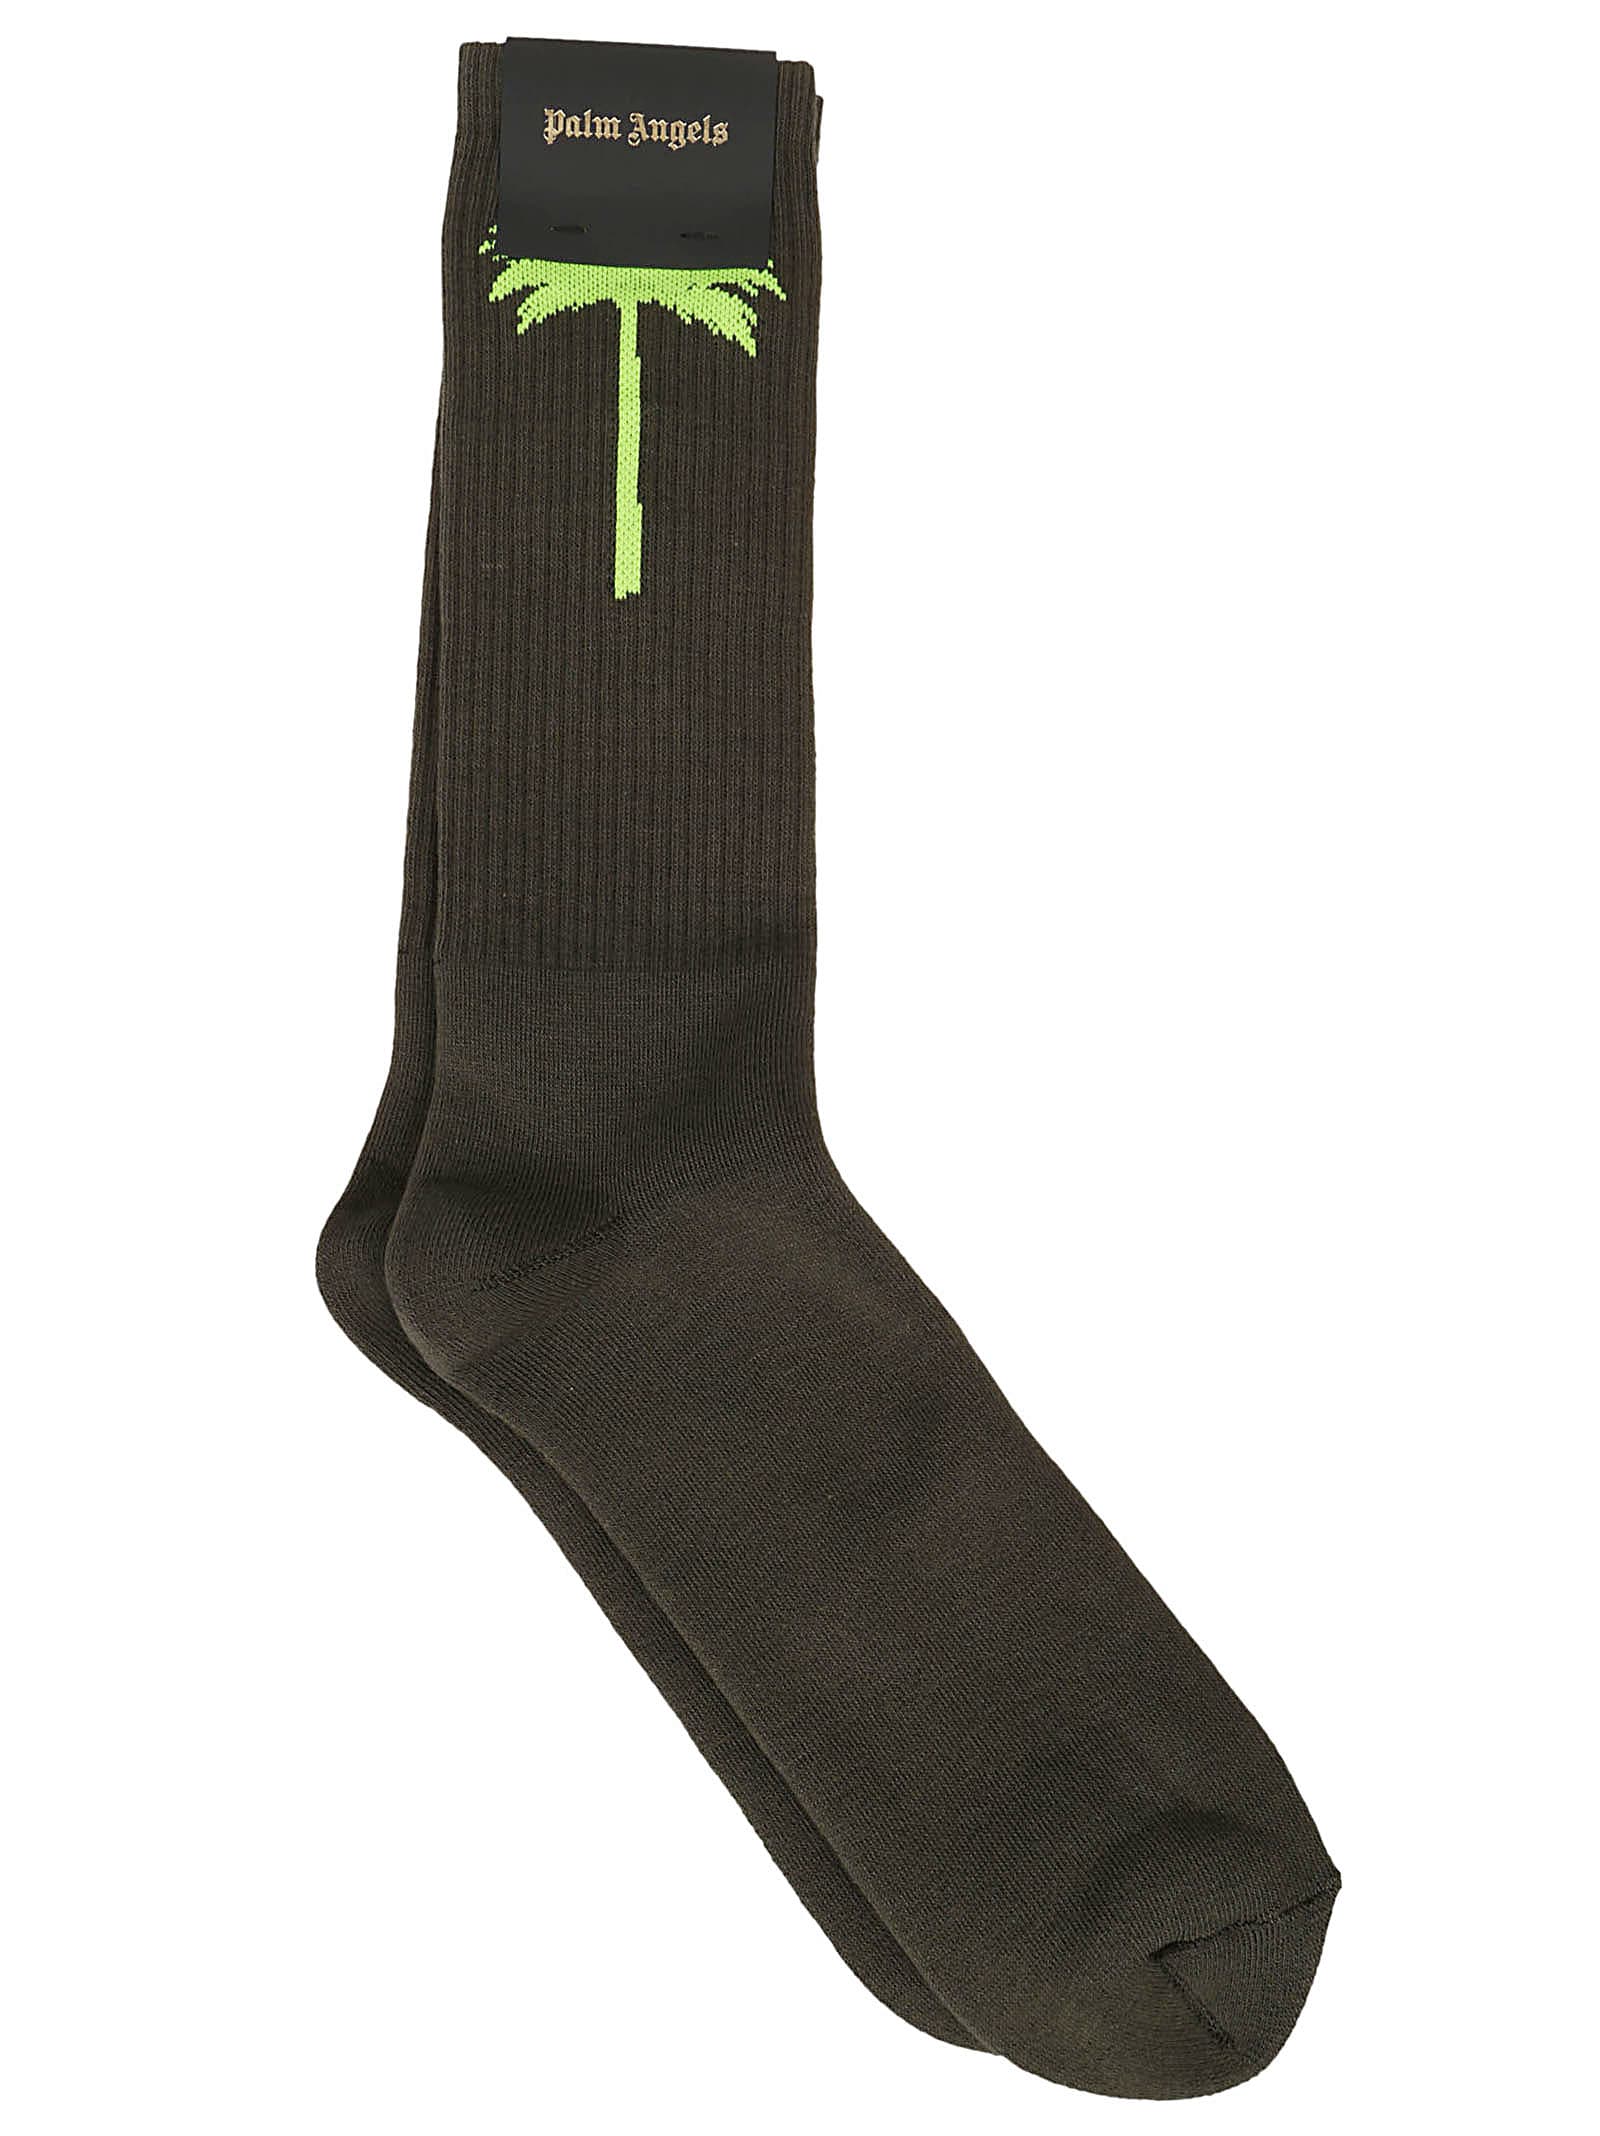 Palm Angels Socks Pxp